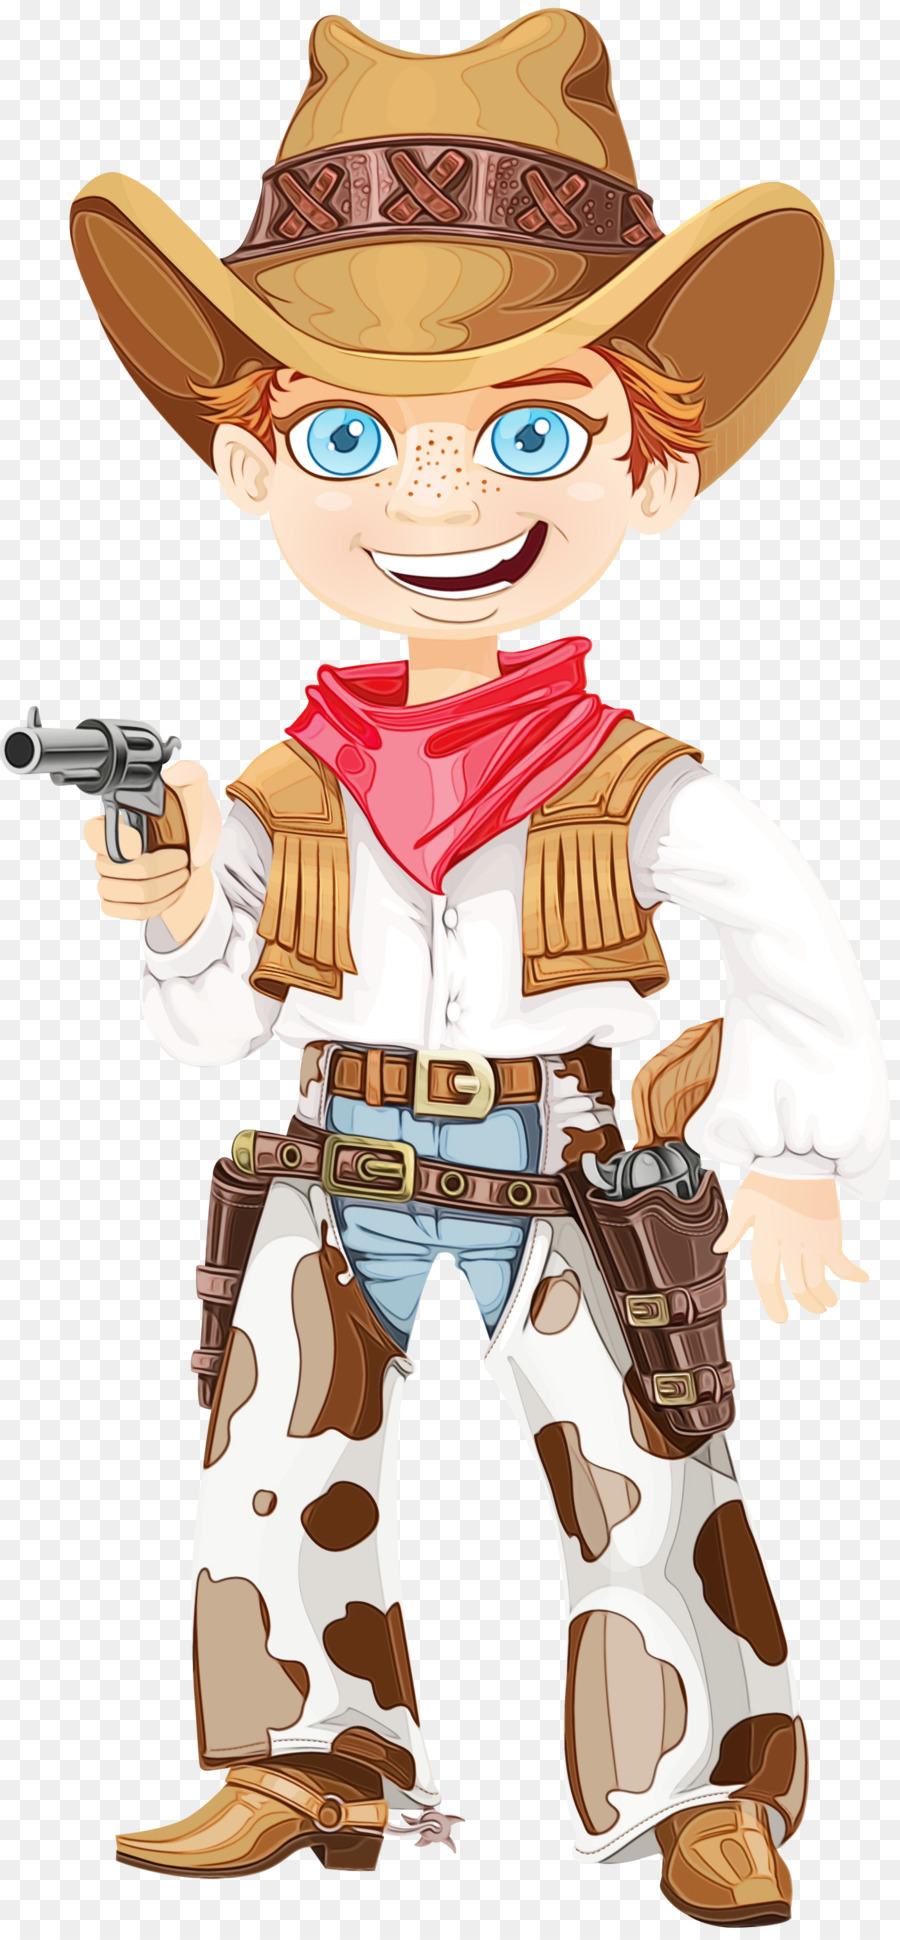 cartoon action figure gun cowboy style